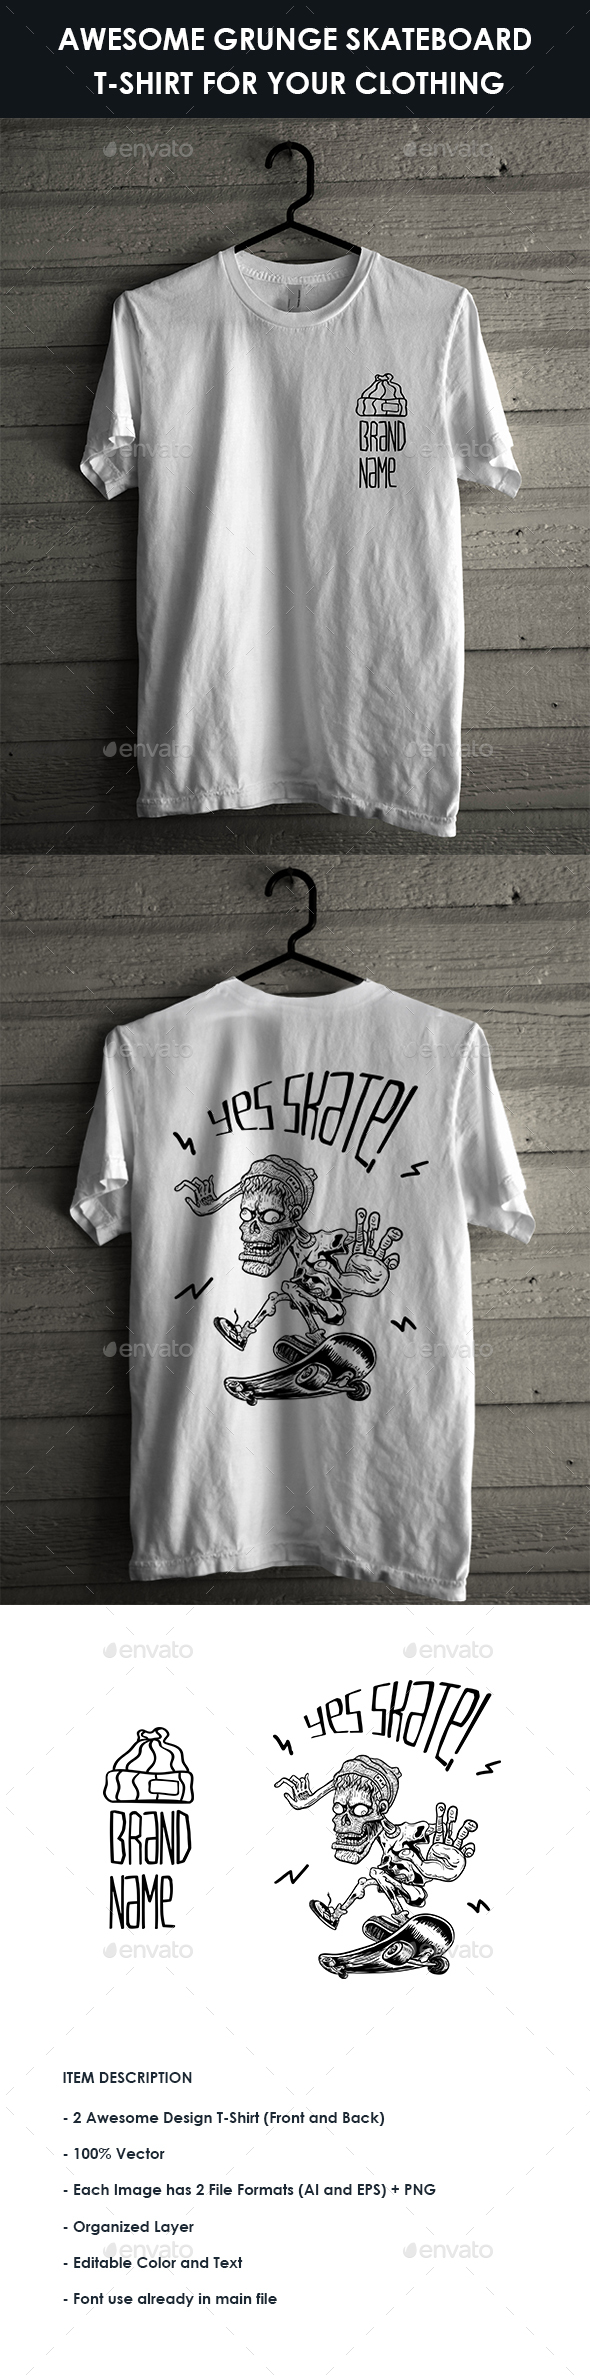 GraphicRiver Awsome Grunge Skateboard Design for Your Clothing 20617032